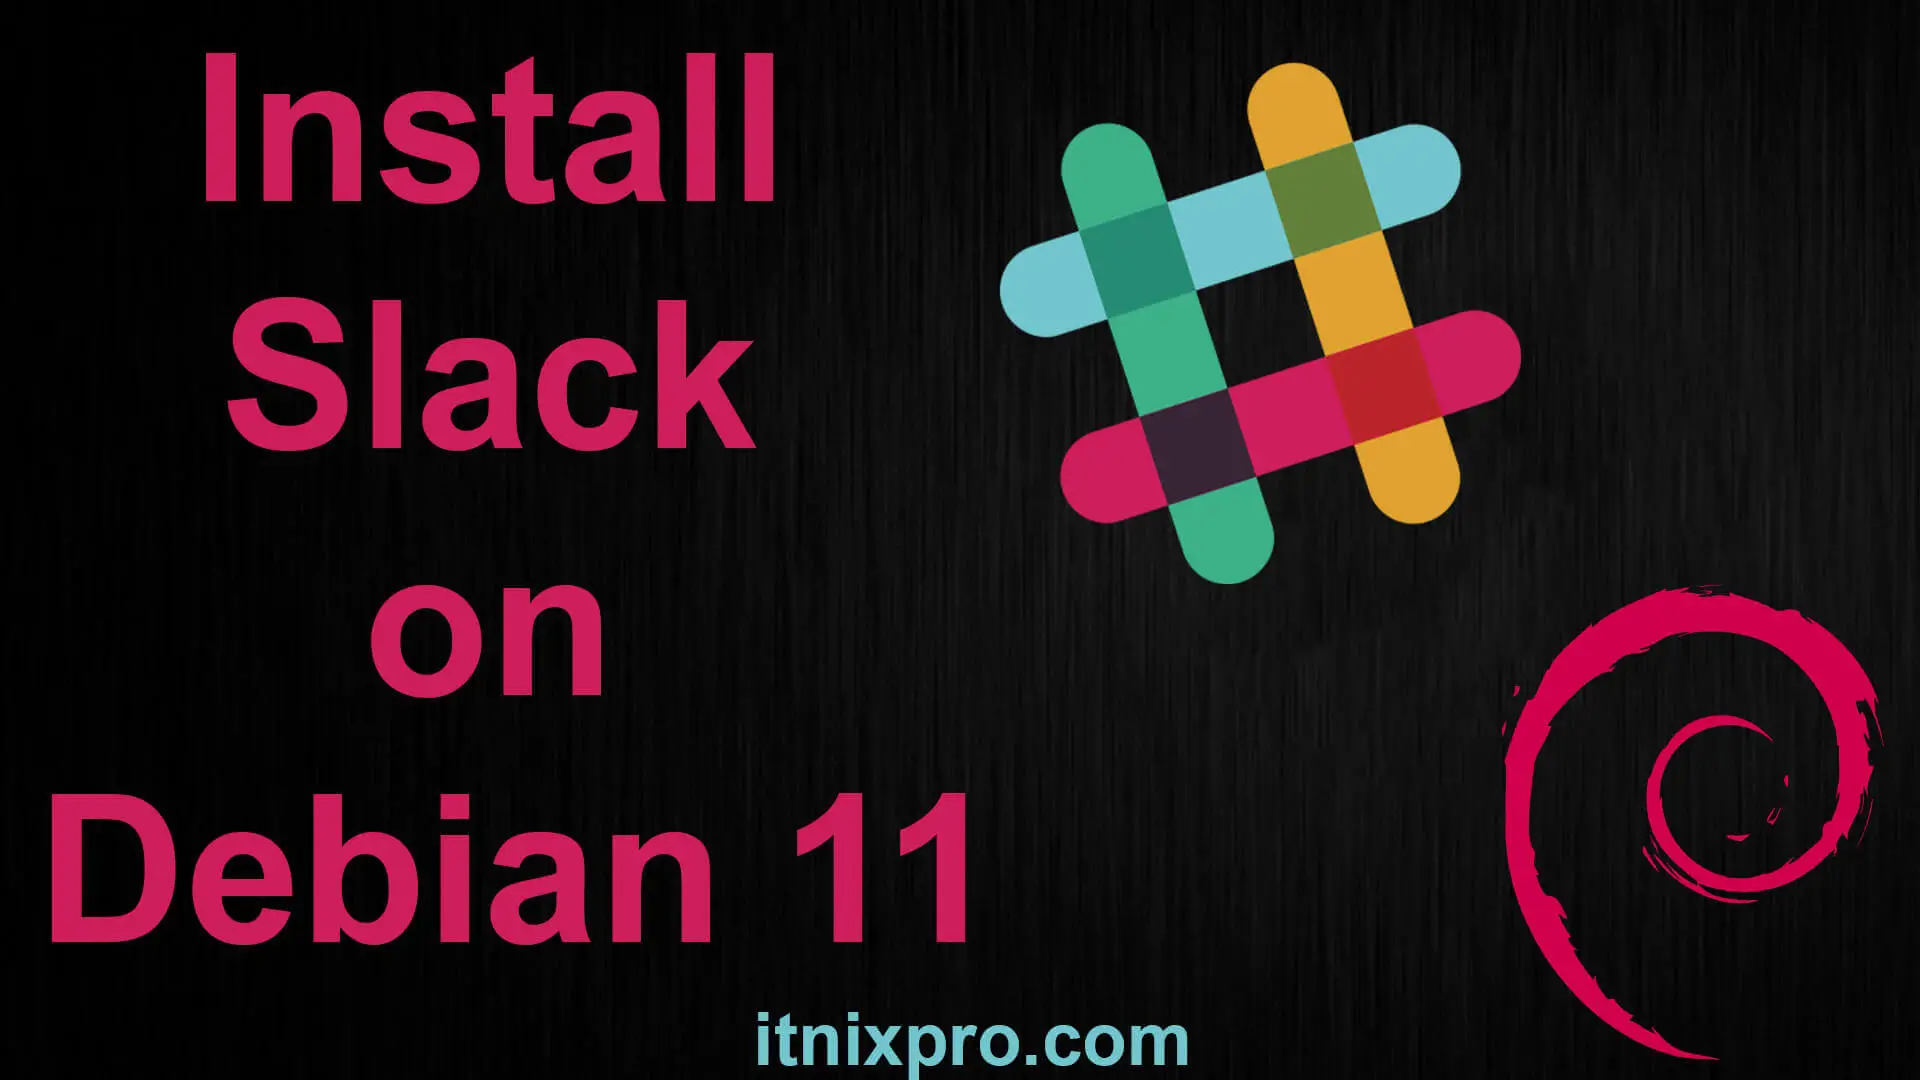 Install Slack on Debian 11